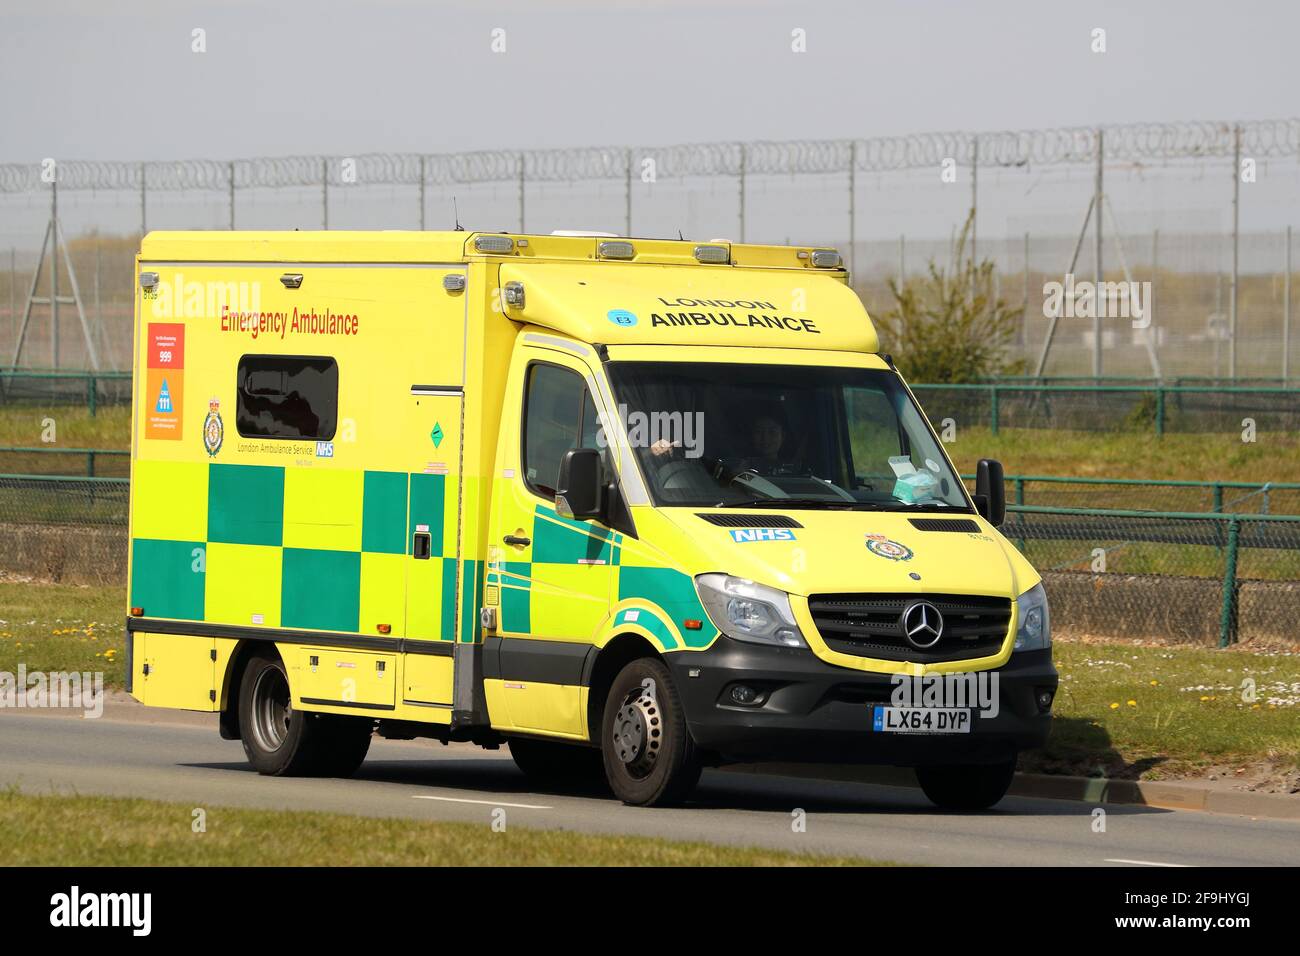 A London NHS Ambulance van near London Heathrow, UK Stock Photo